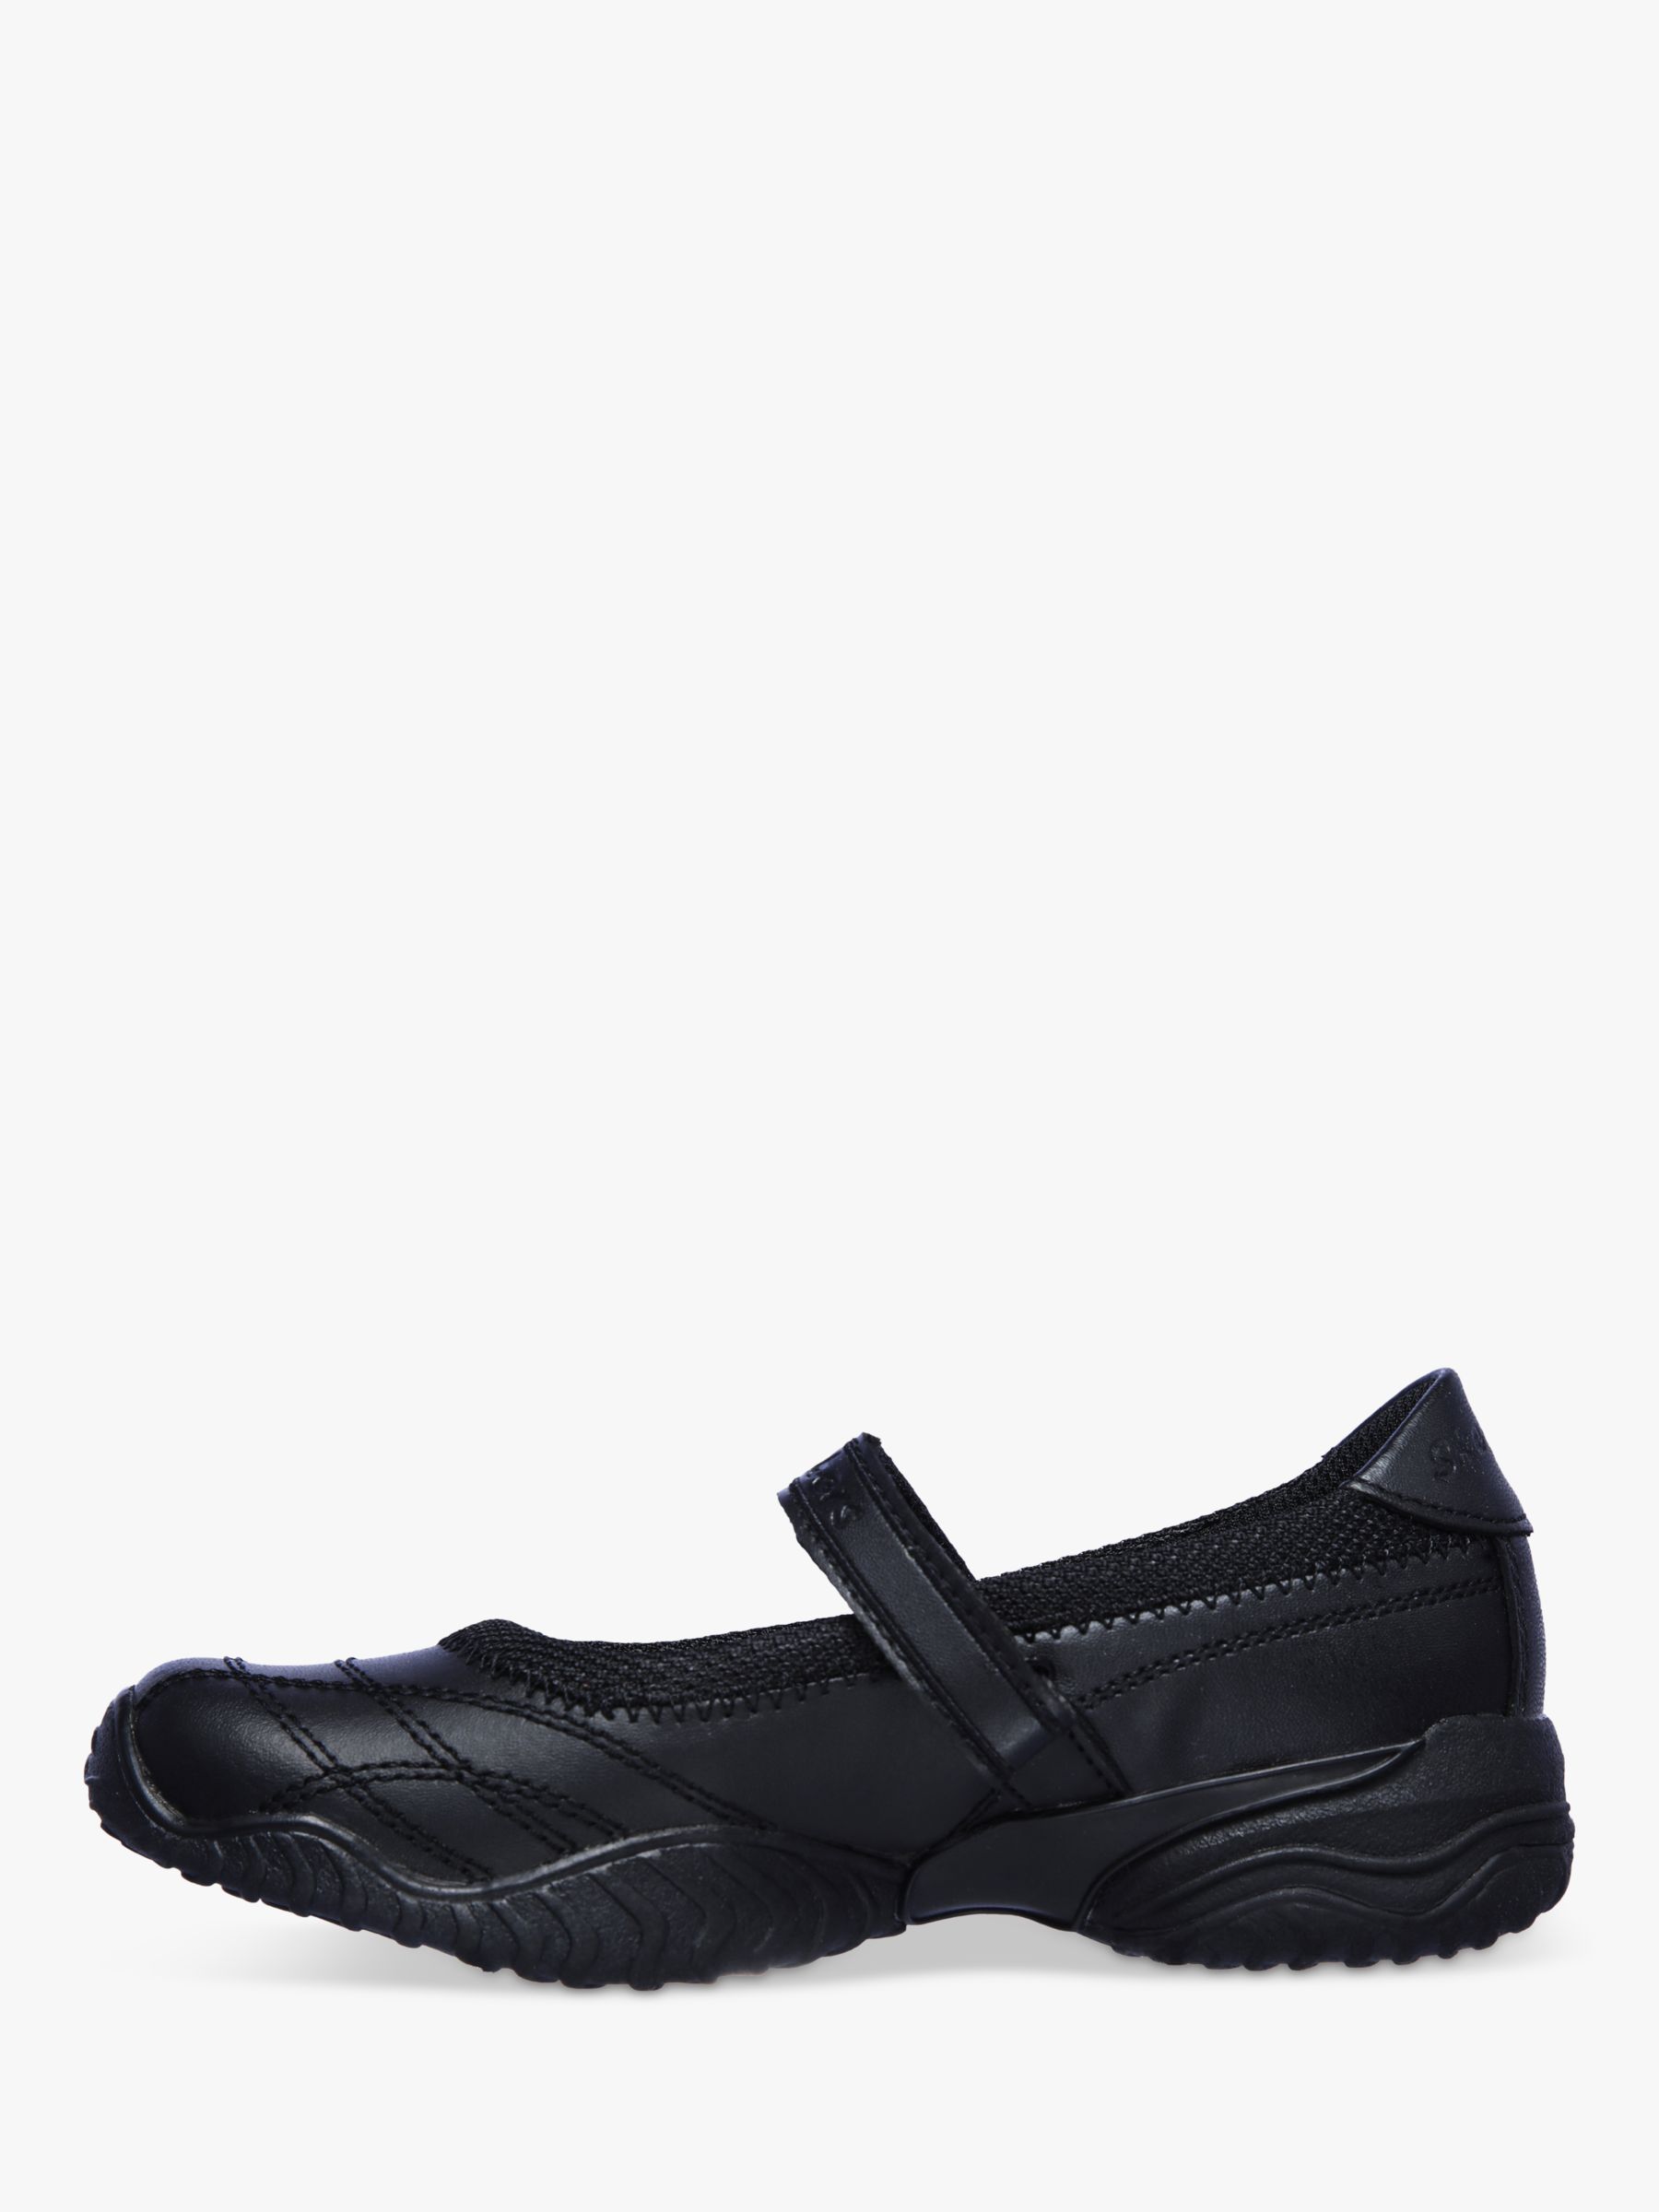 Skechers Kids' Velocity Pouty School Shoes, Black, 28